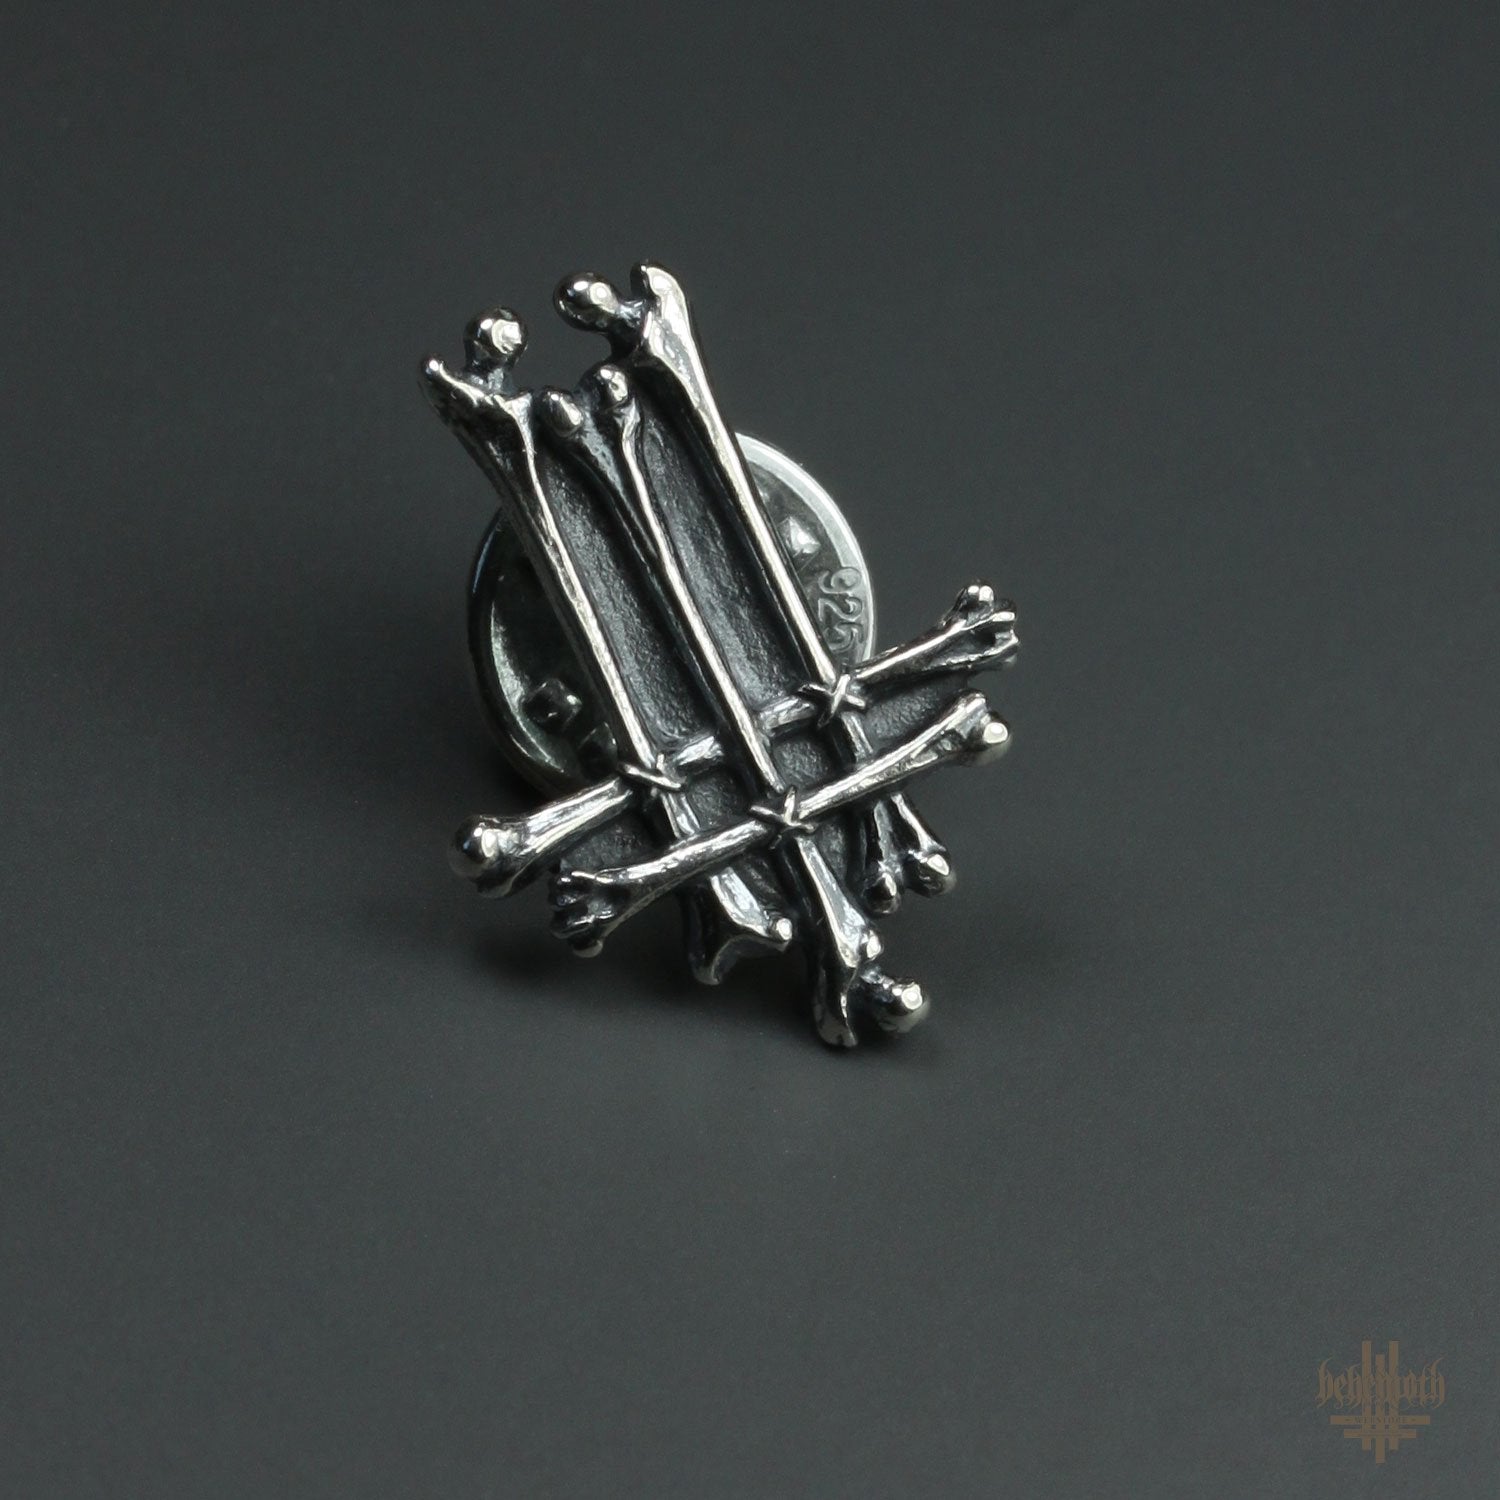 A Behemoth 'Trivmviratvs Bones' sterling silver pin